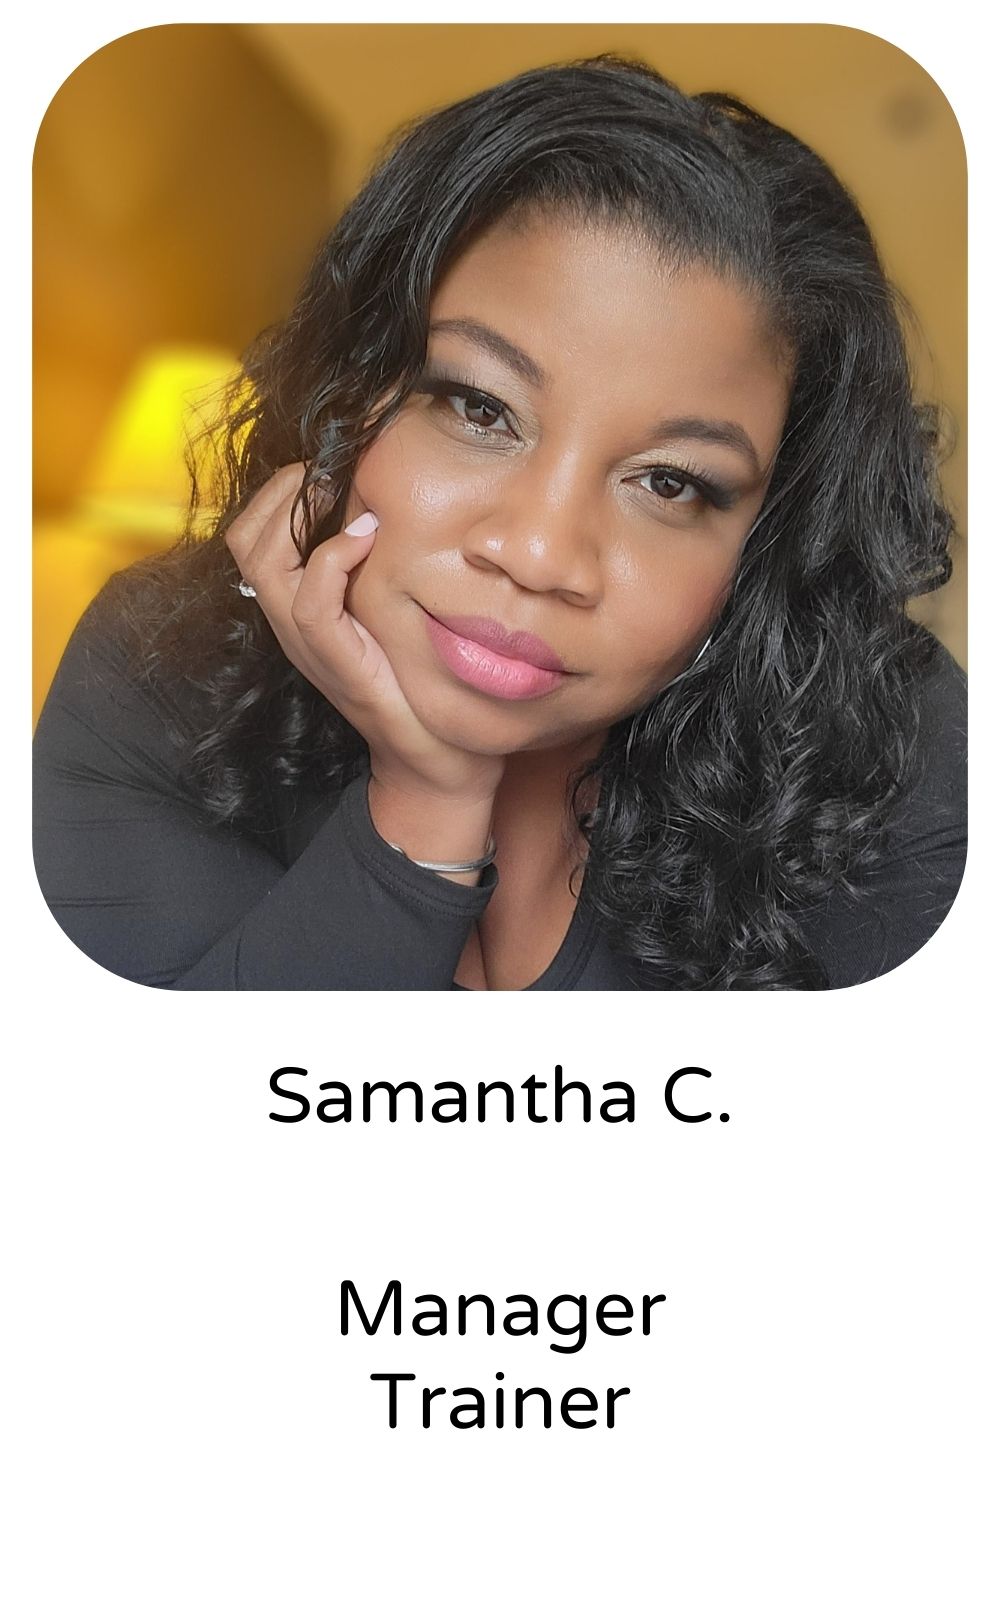 Samantha C, Manager, Trainer